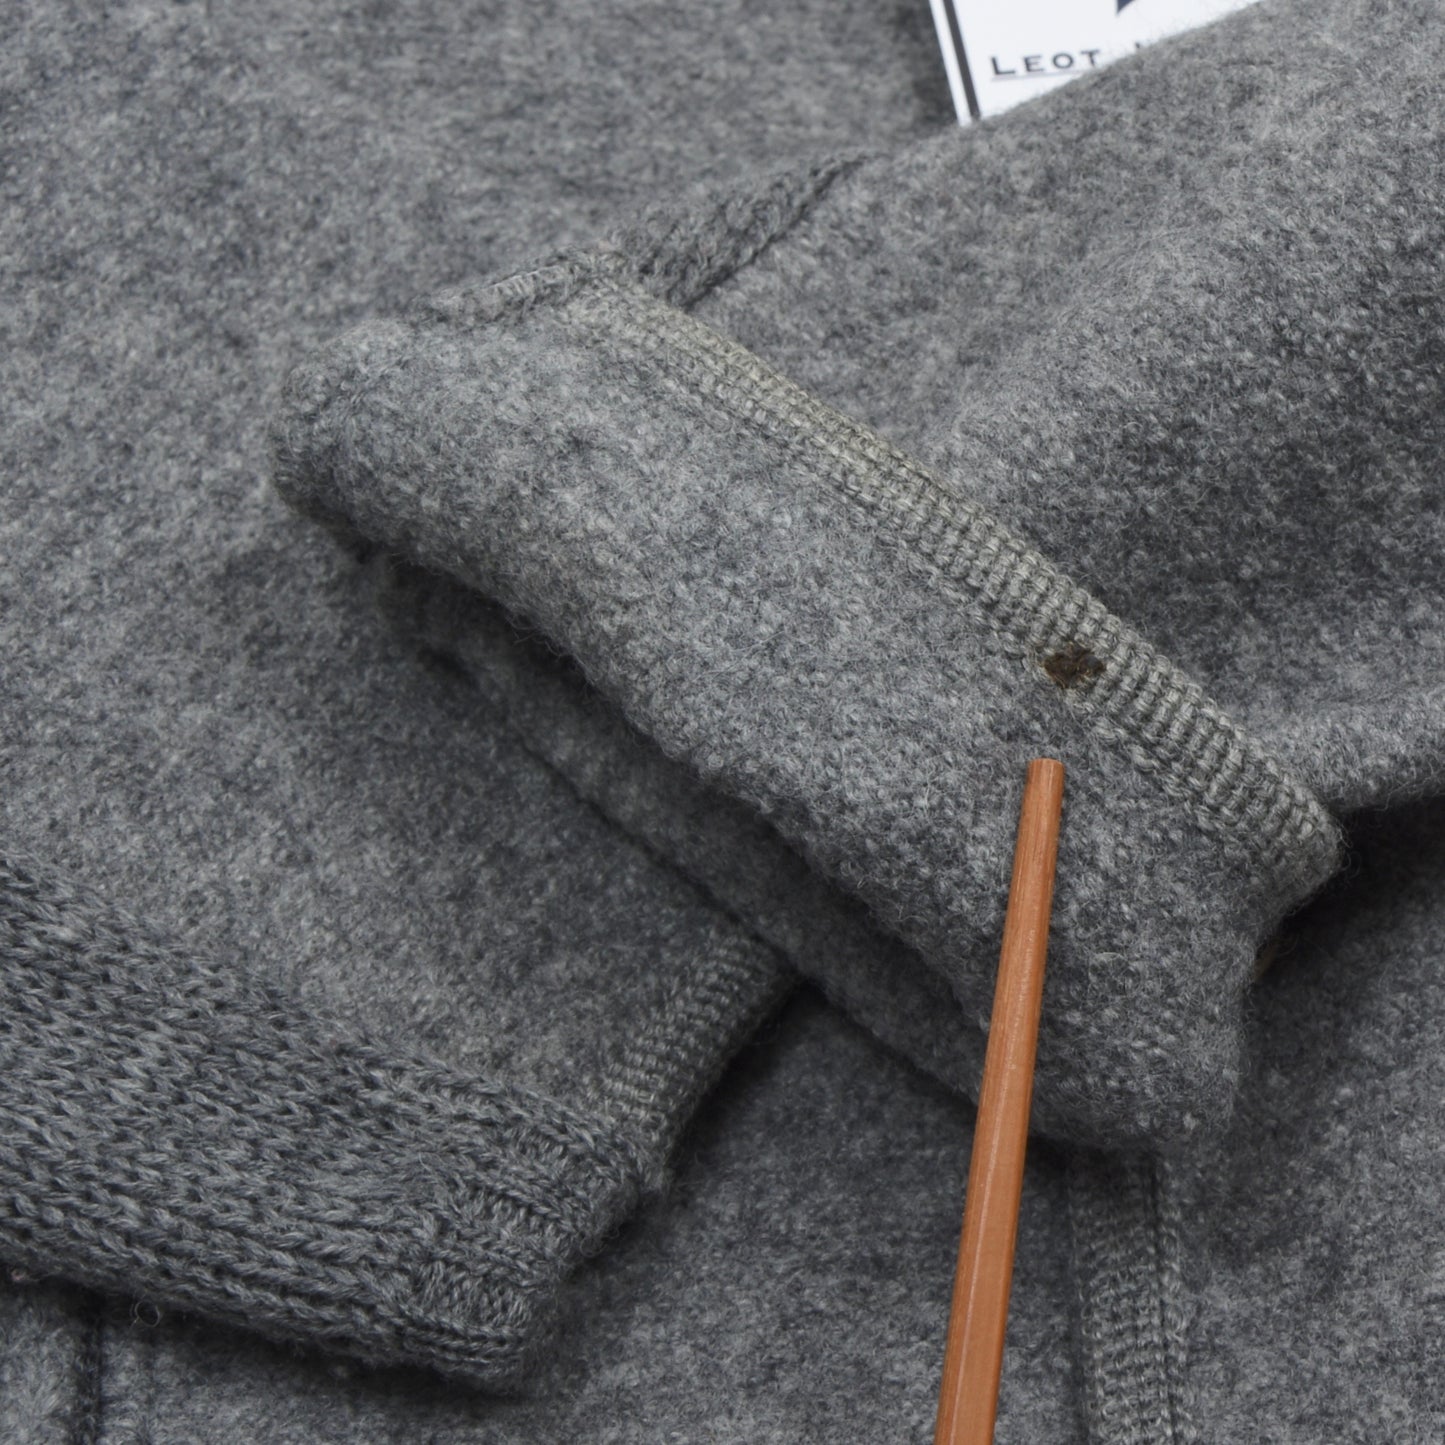 Giesswein Woll Cardigan Pullover/Jacke Größe 48 - Grau